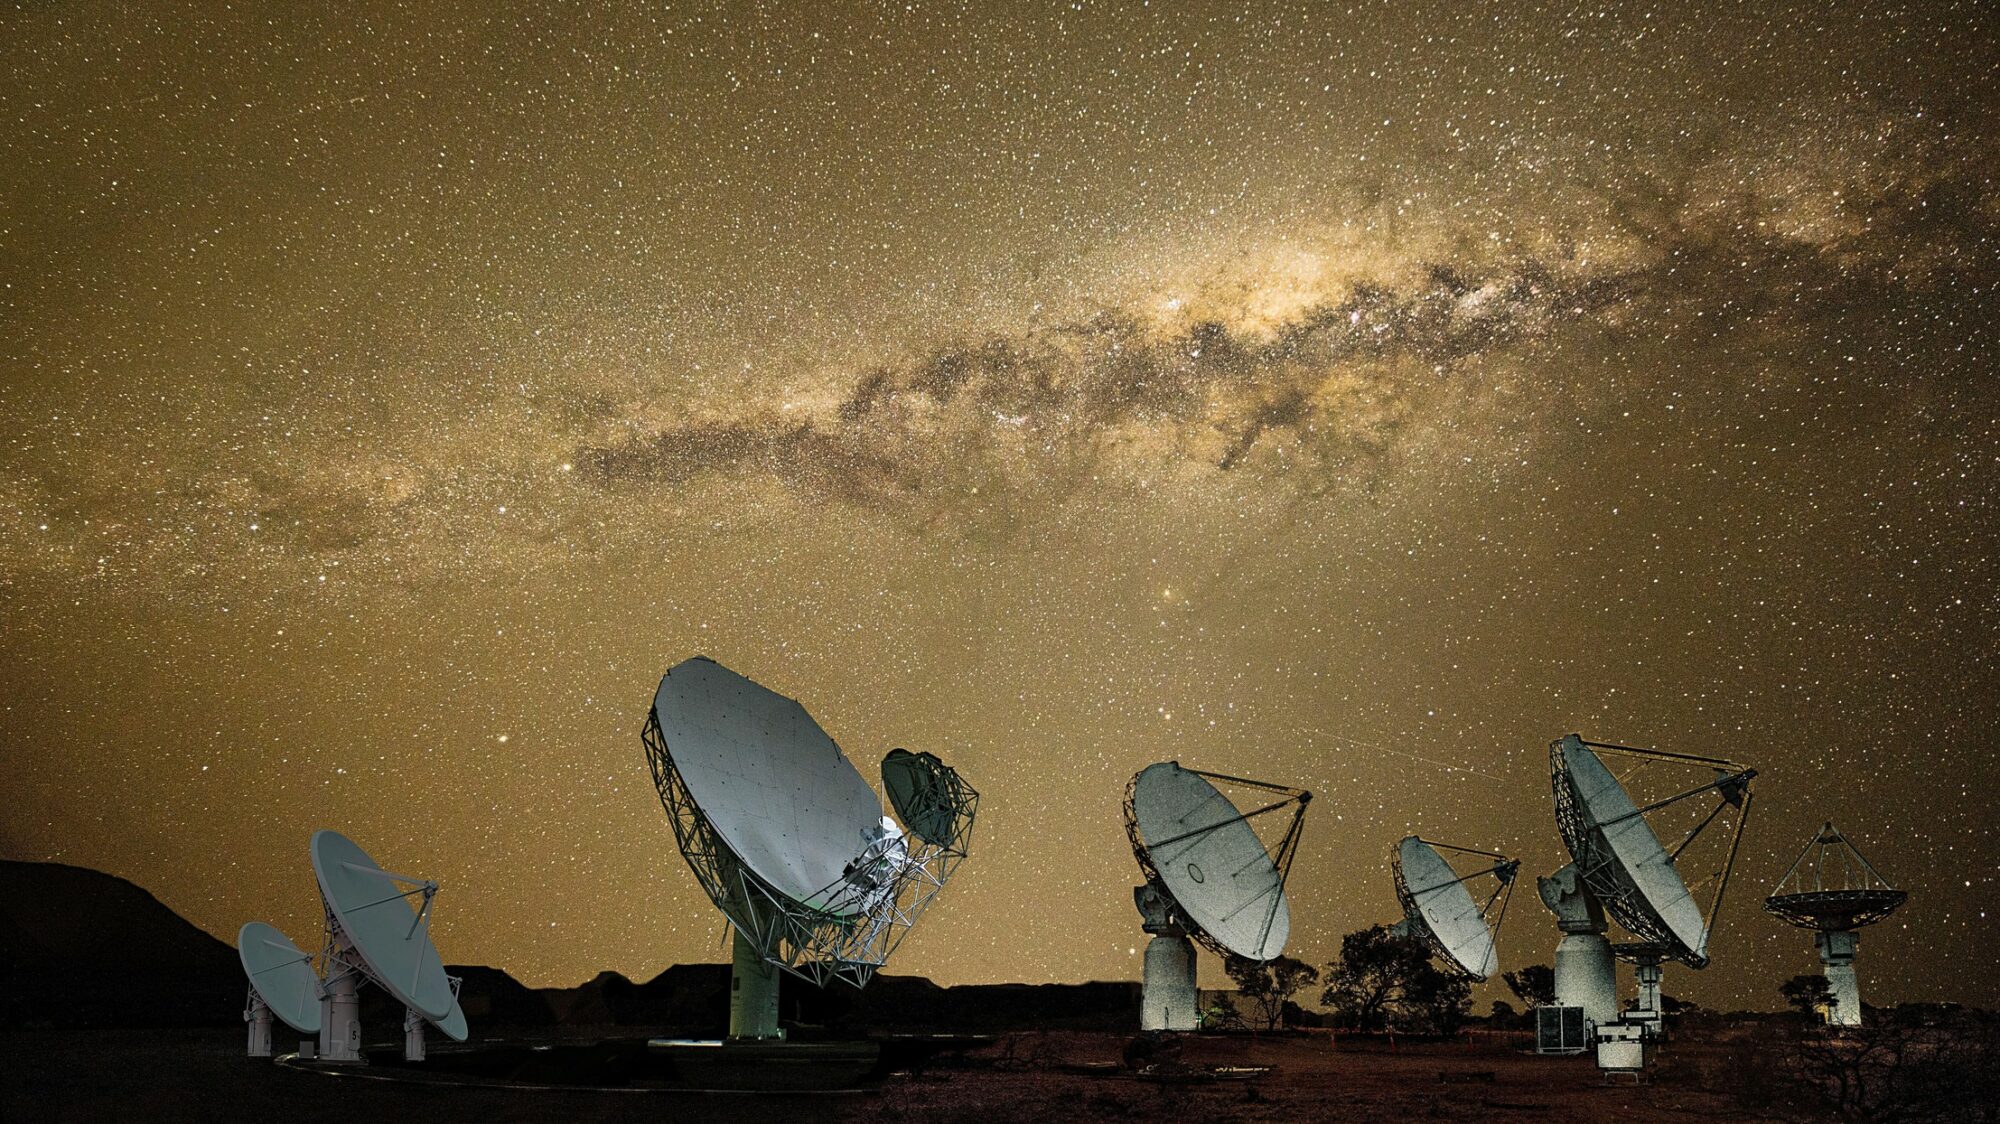 large antennas aligned under a night sky